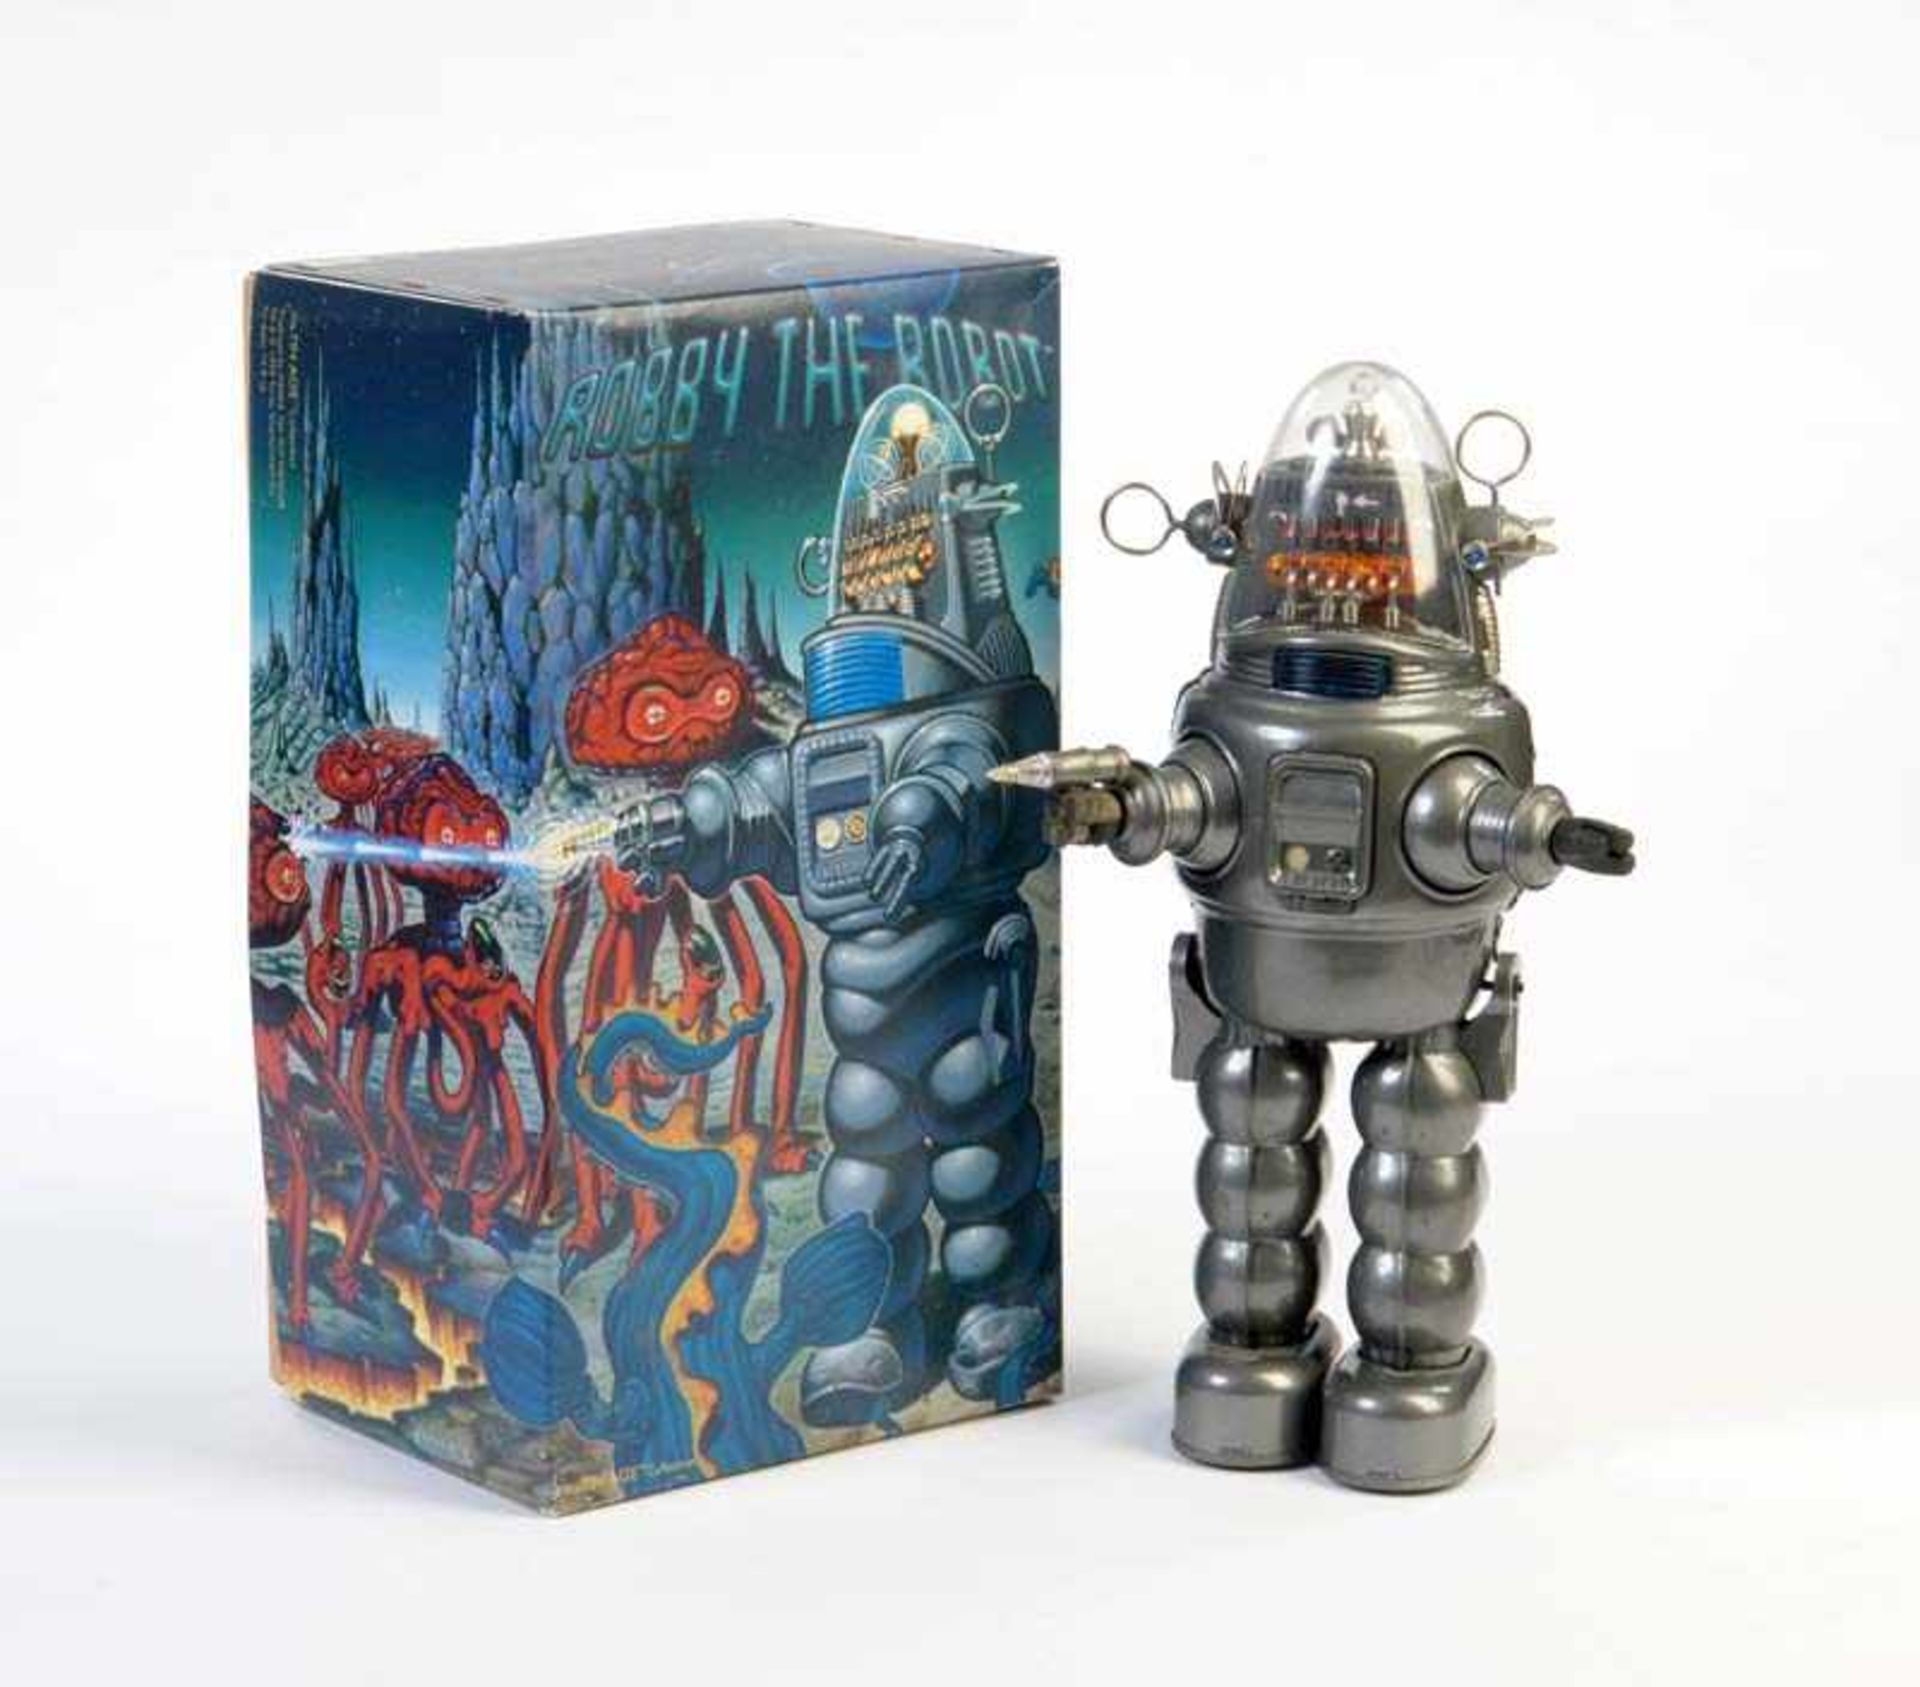 Tin Age Collection, Robby the Robot von 1999, Japan, 34 cm, Blech, Funktion ok, Okt Z 1, Z 1 Tin Age